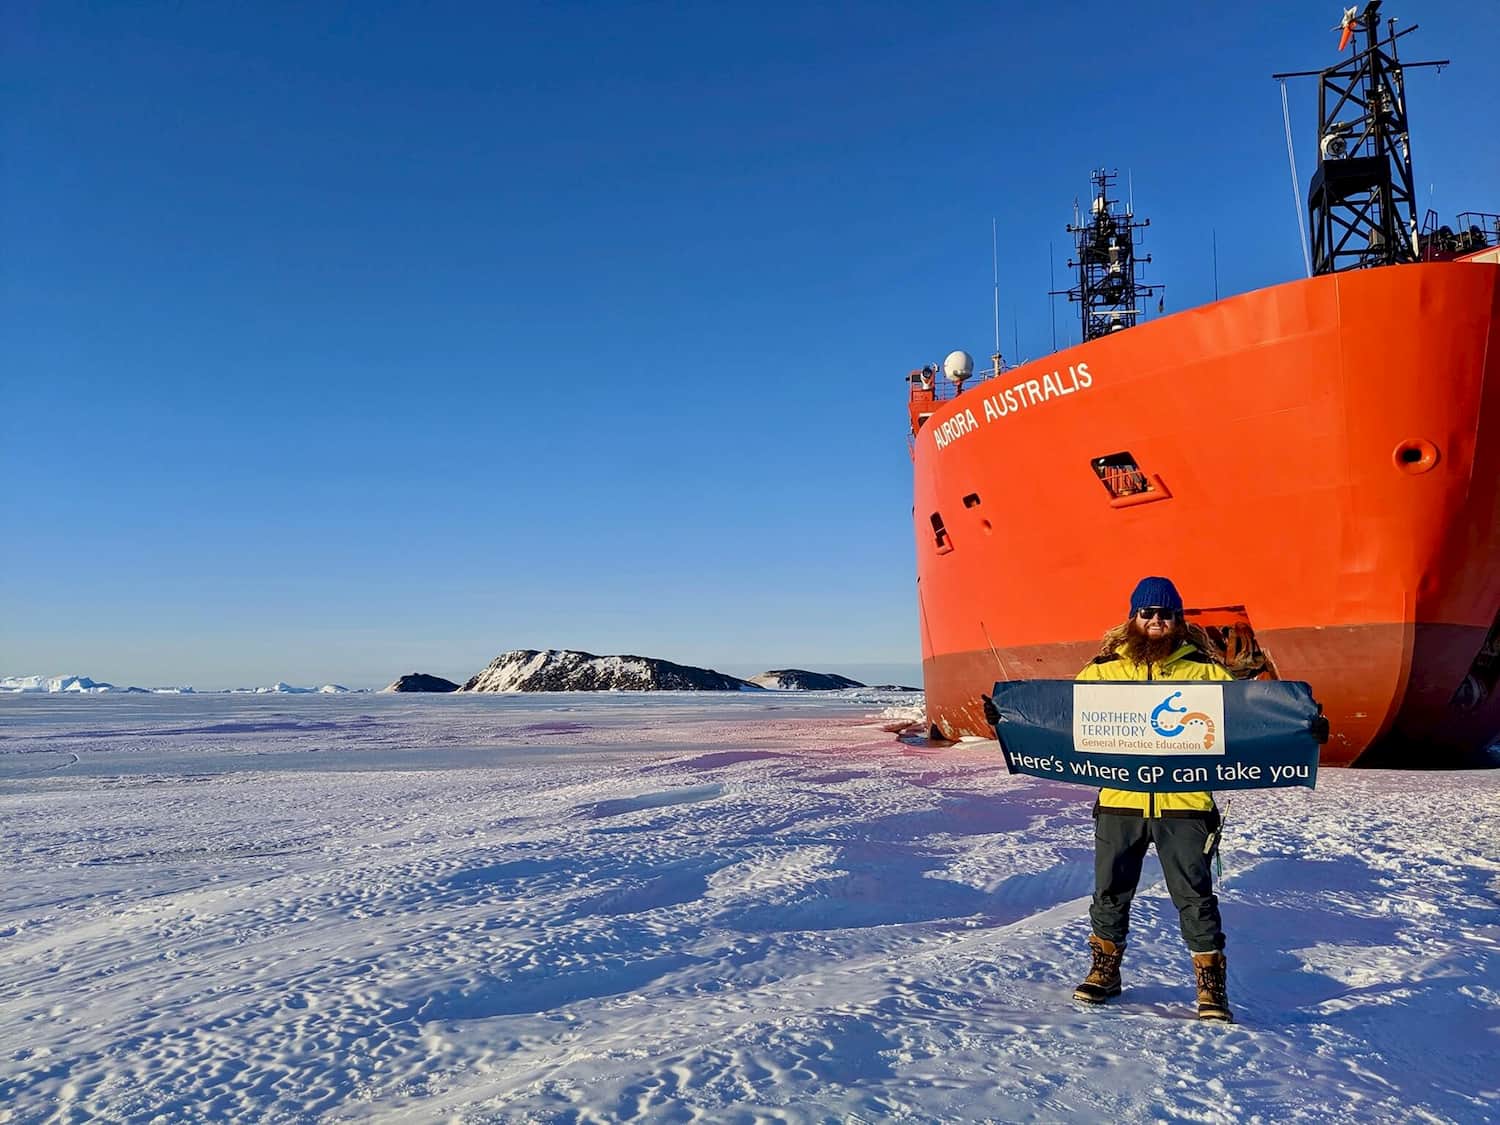 Dr Rhys Harding in Antarctica in front of Aurora Australis icebreaker ship